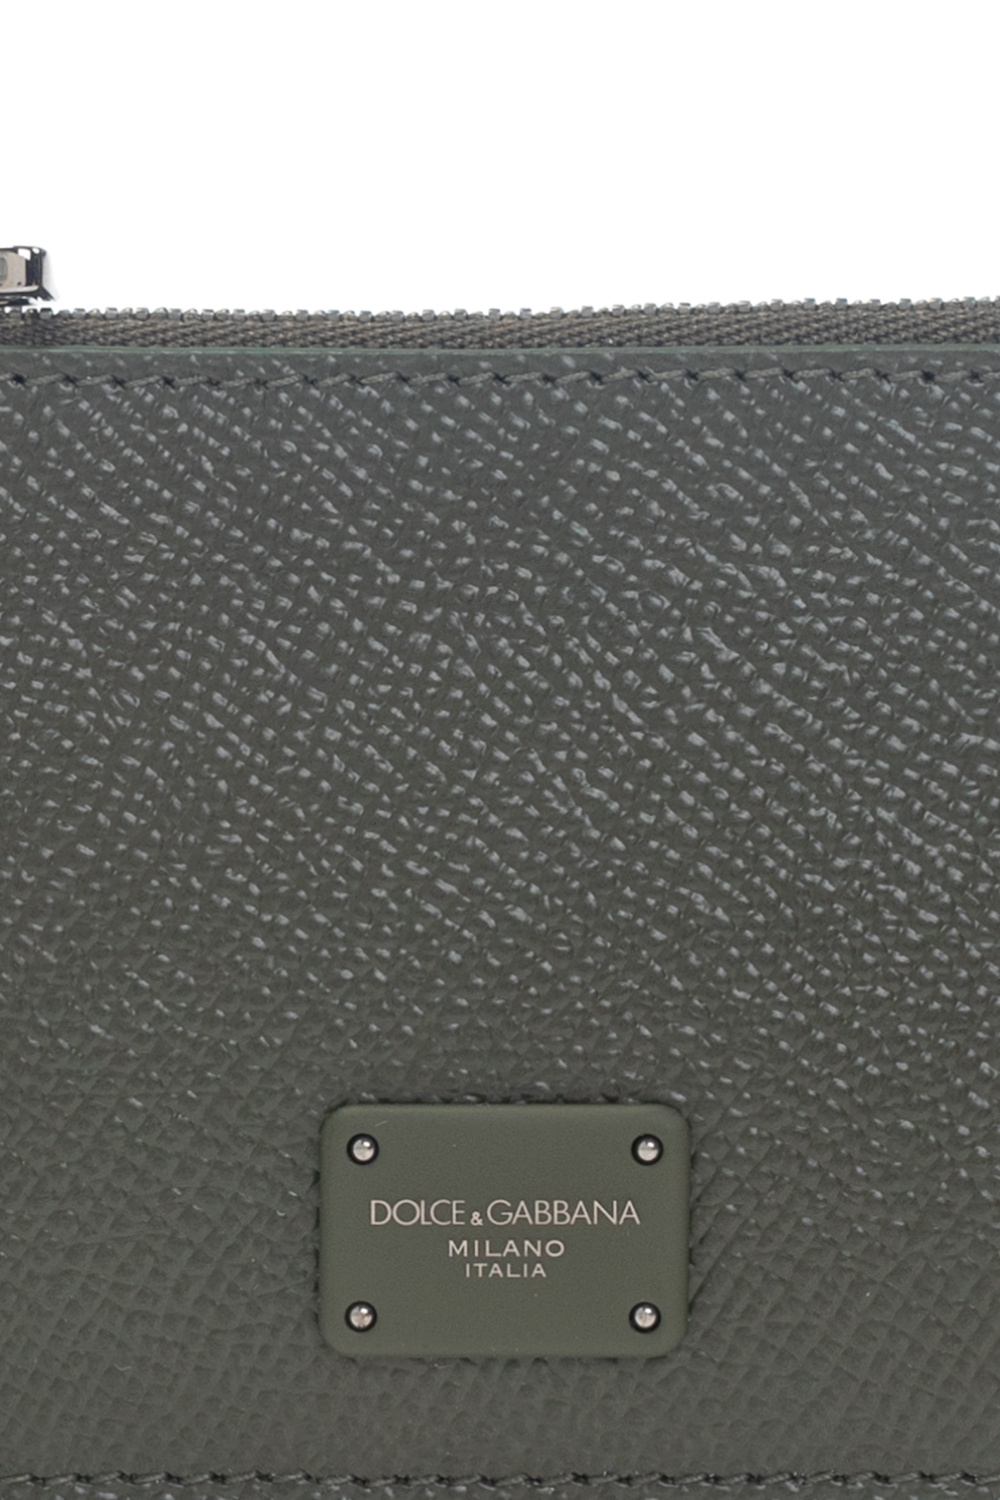 Dolce & Gabbana Card holder with keyring